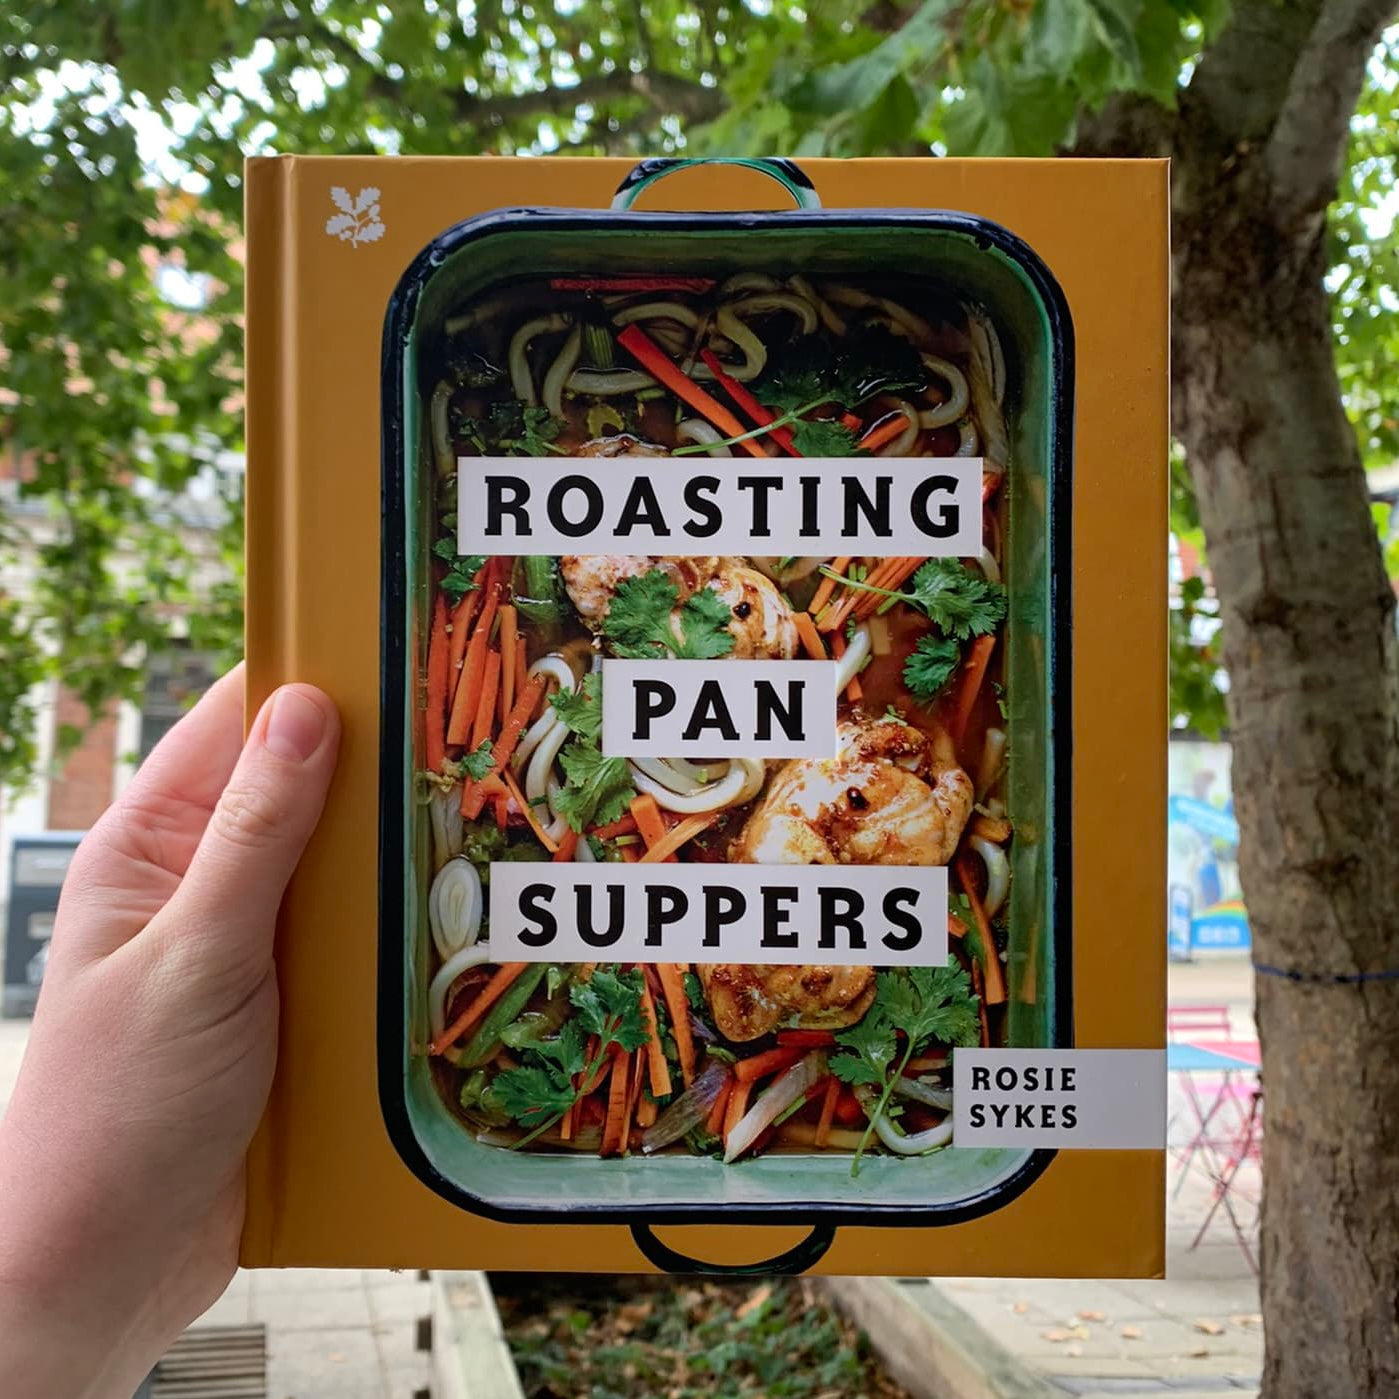 ‘Roasting Pan Suppers’ by Rosie Sykes